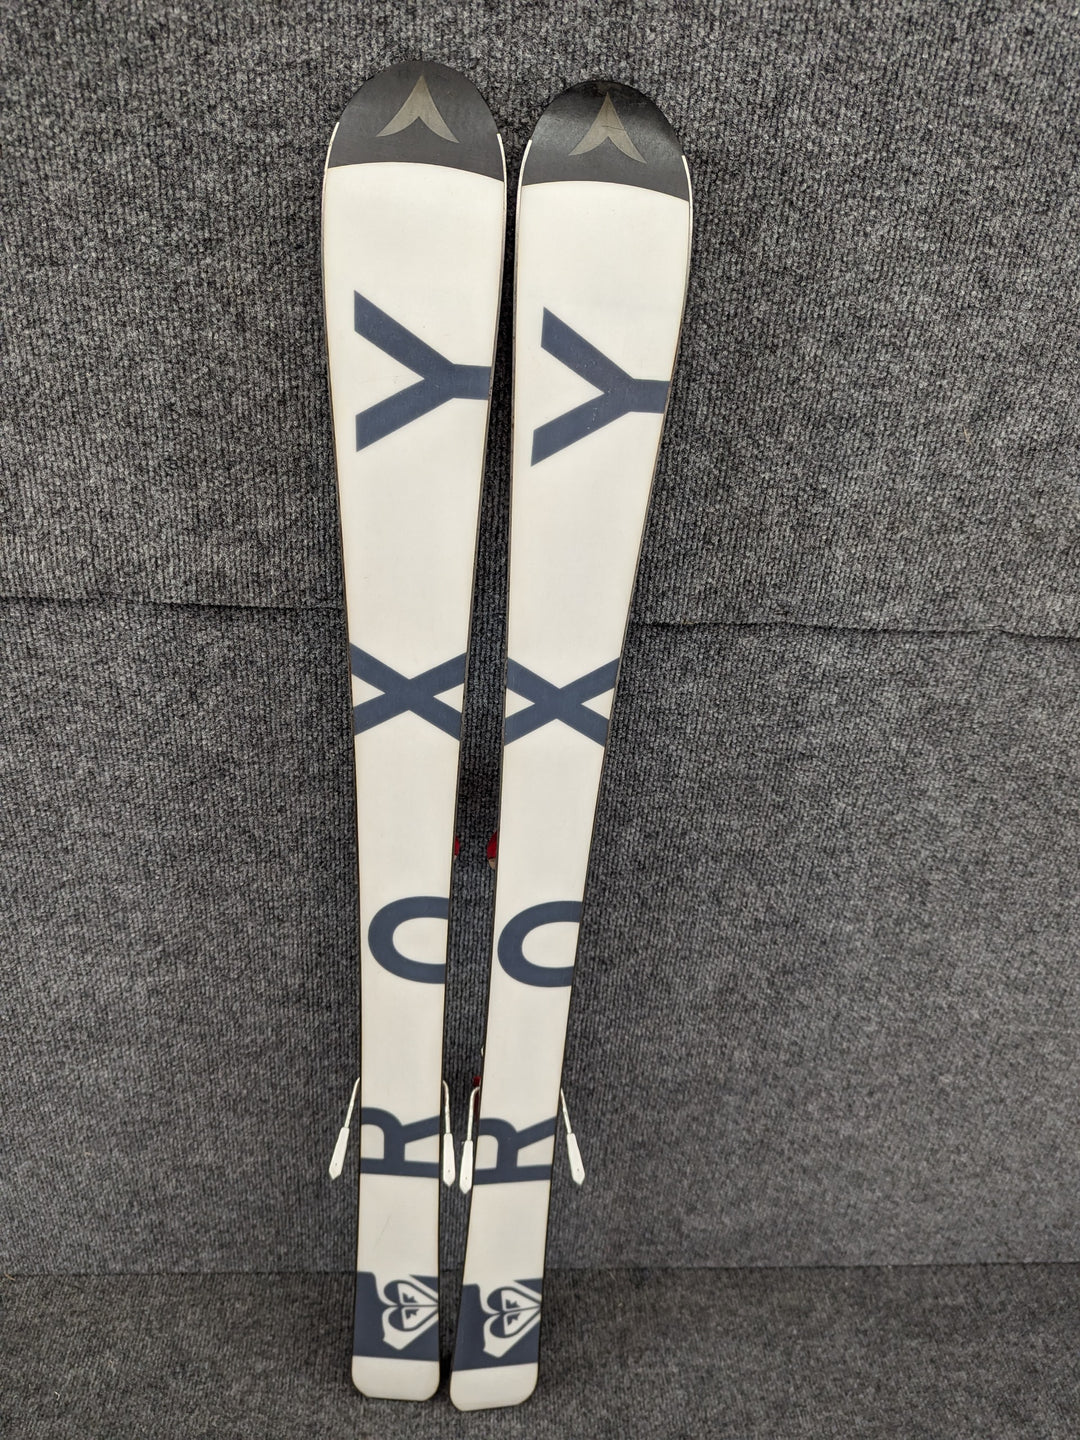 Roxy Length 110 cm/43.5" Alpine Skis